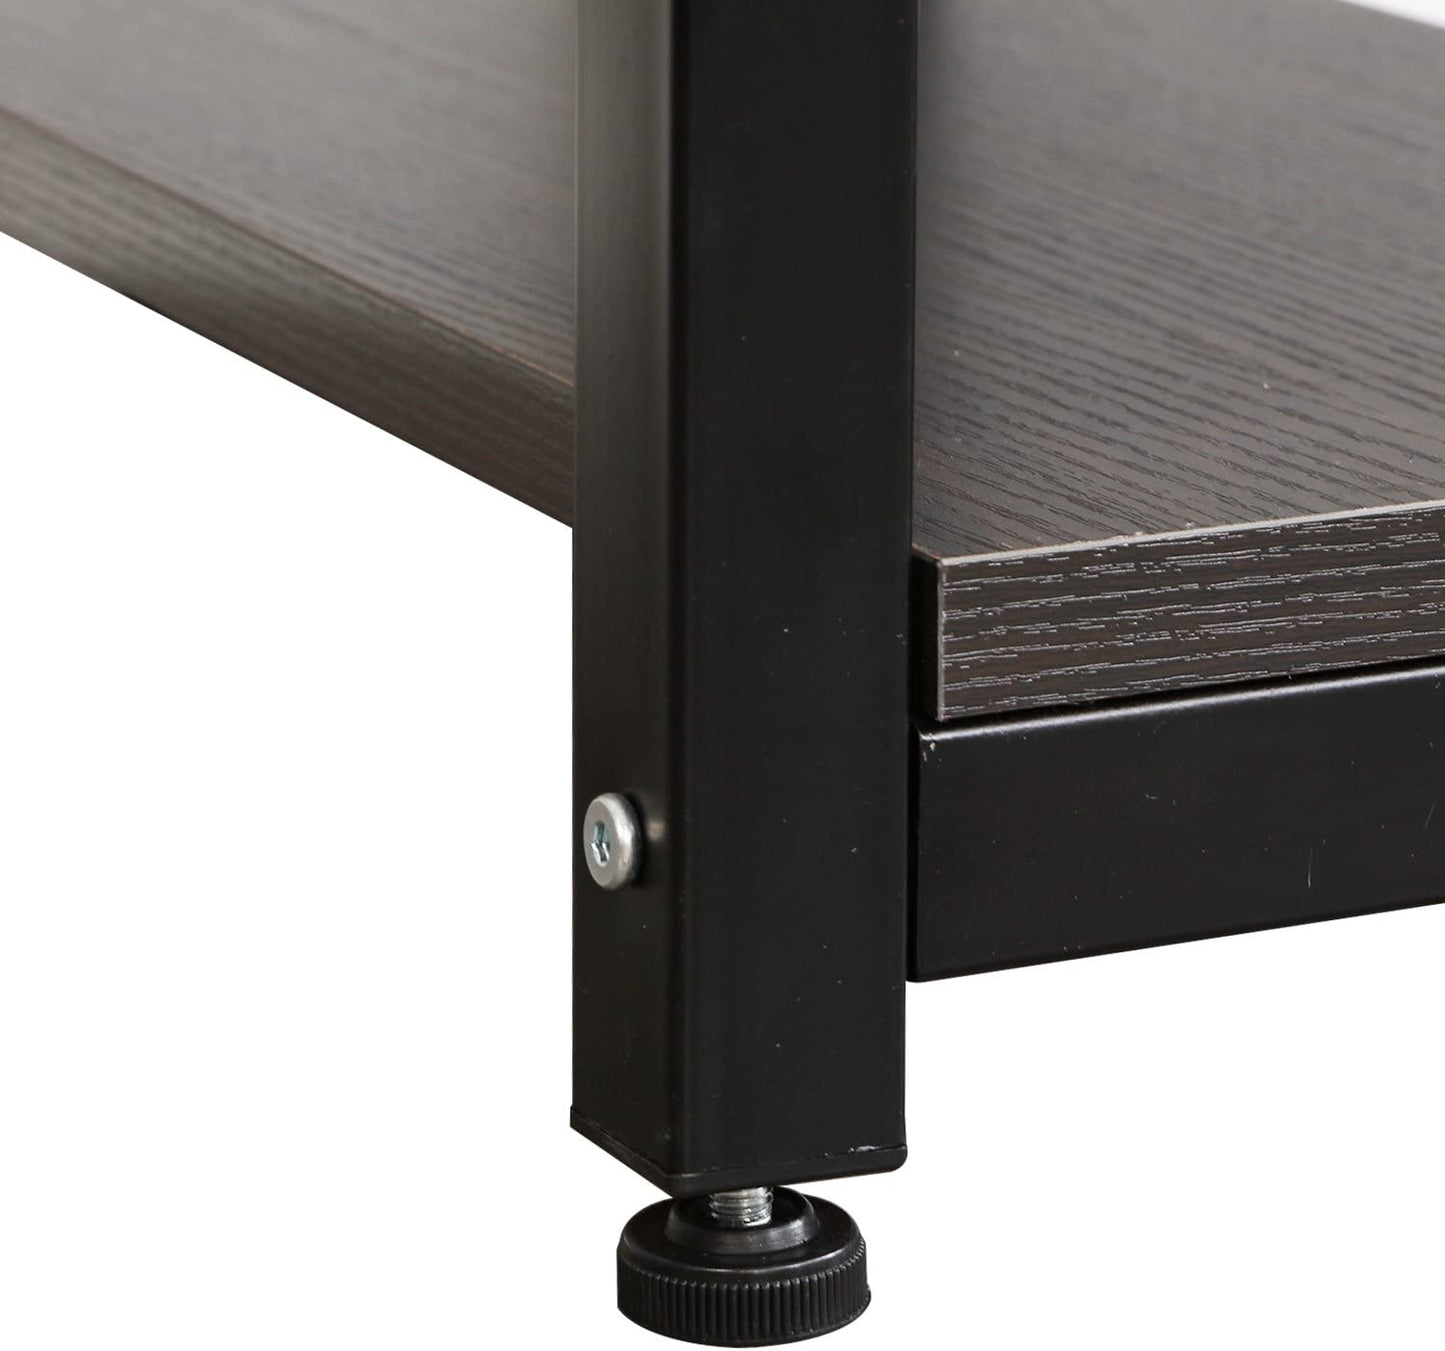 SogesPower 55" Office Desk with Storage Shelves Morden Style- Black